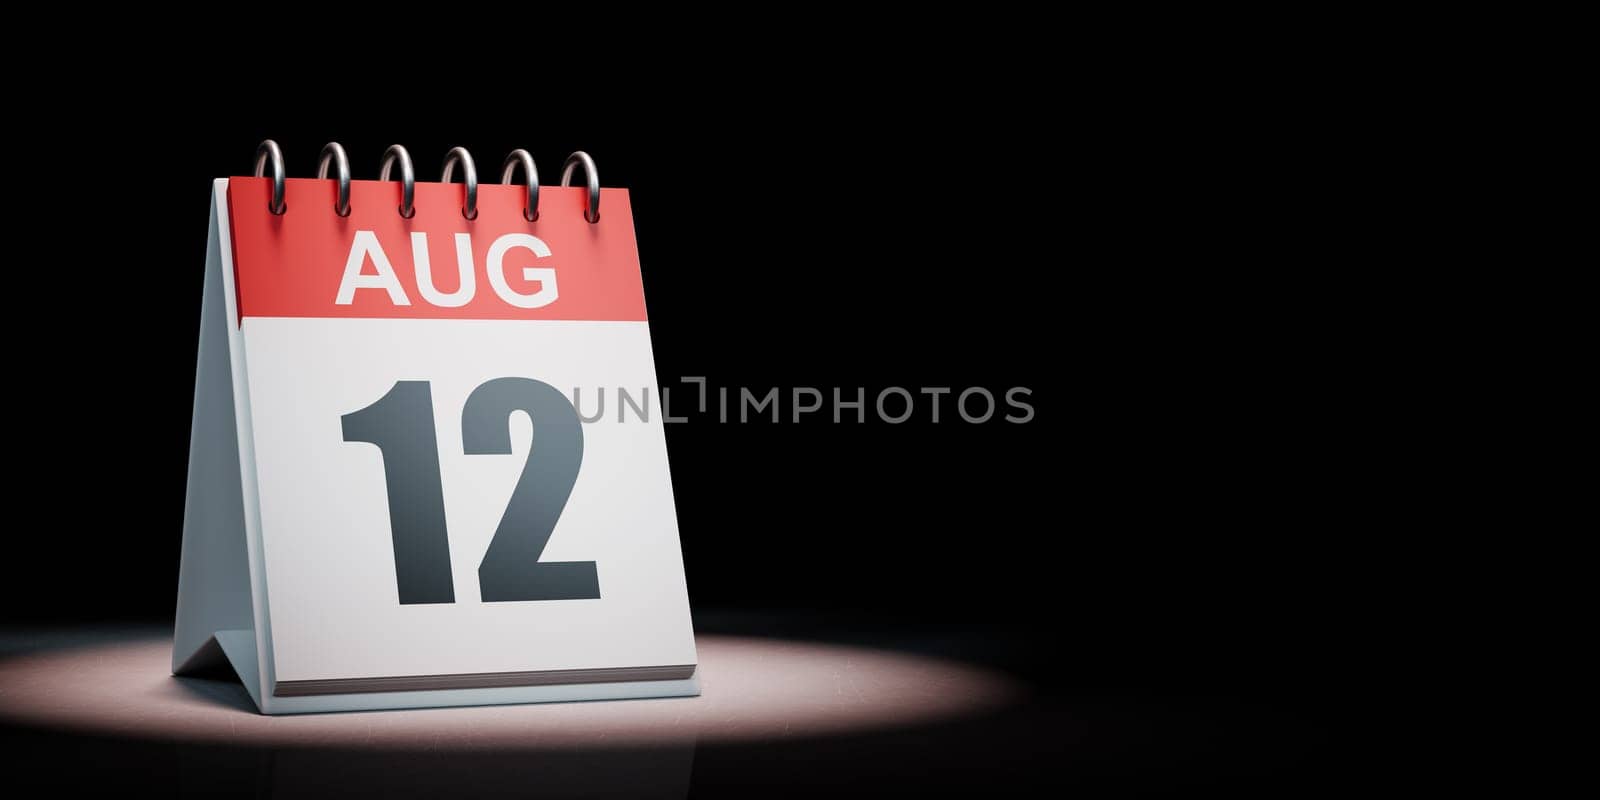 August 12 Calendar Spotlighted on Black Background by make